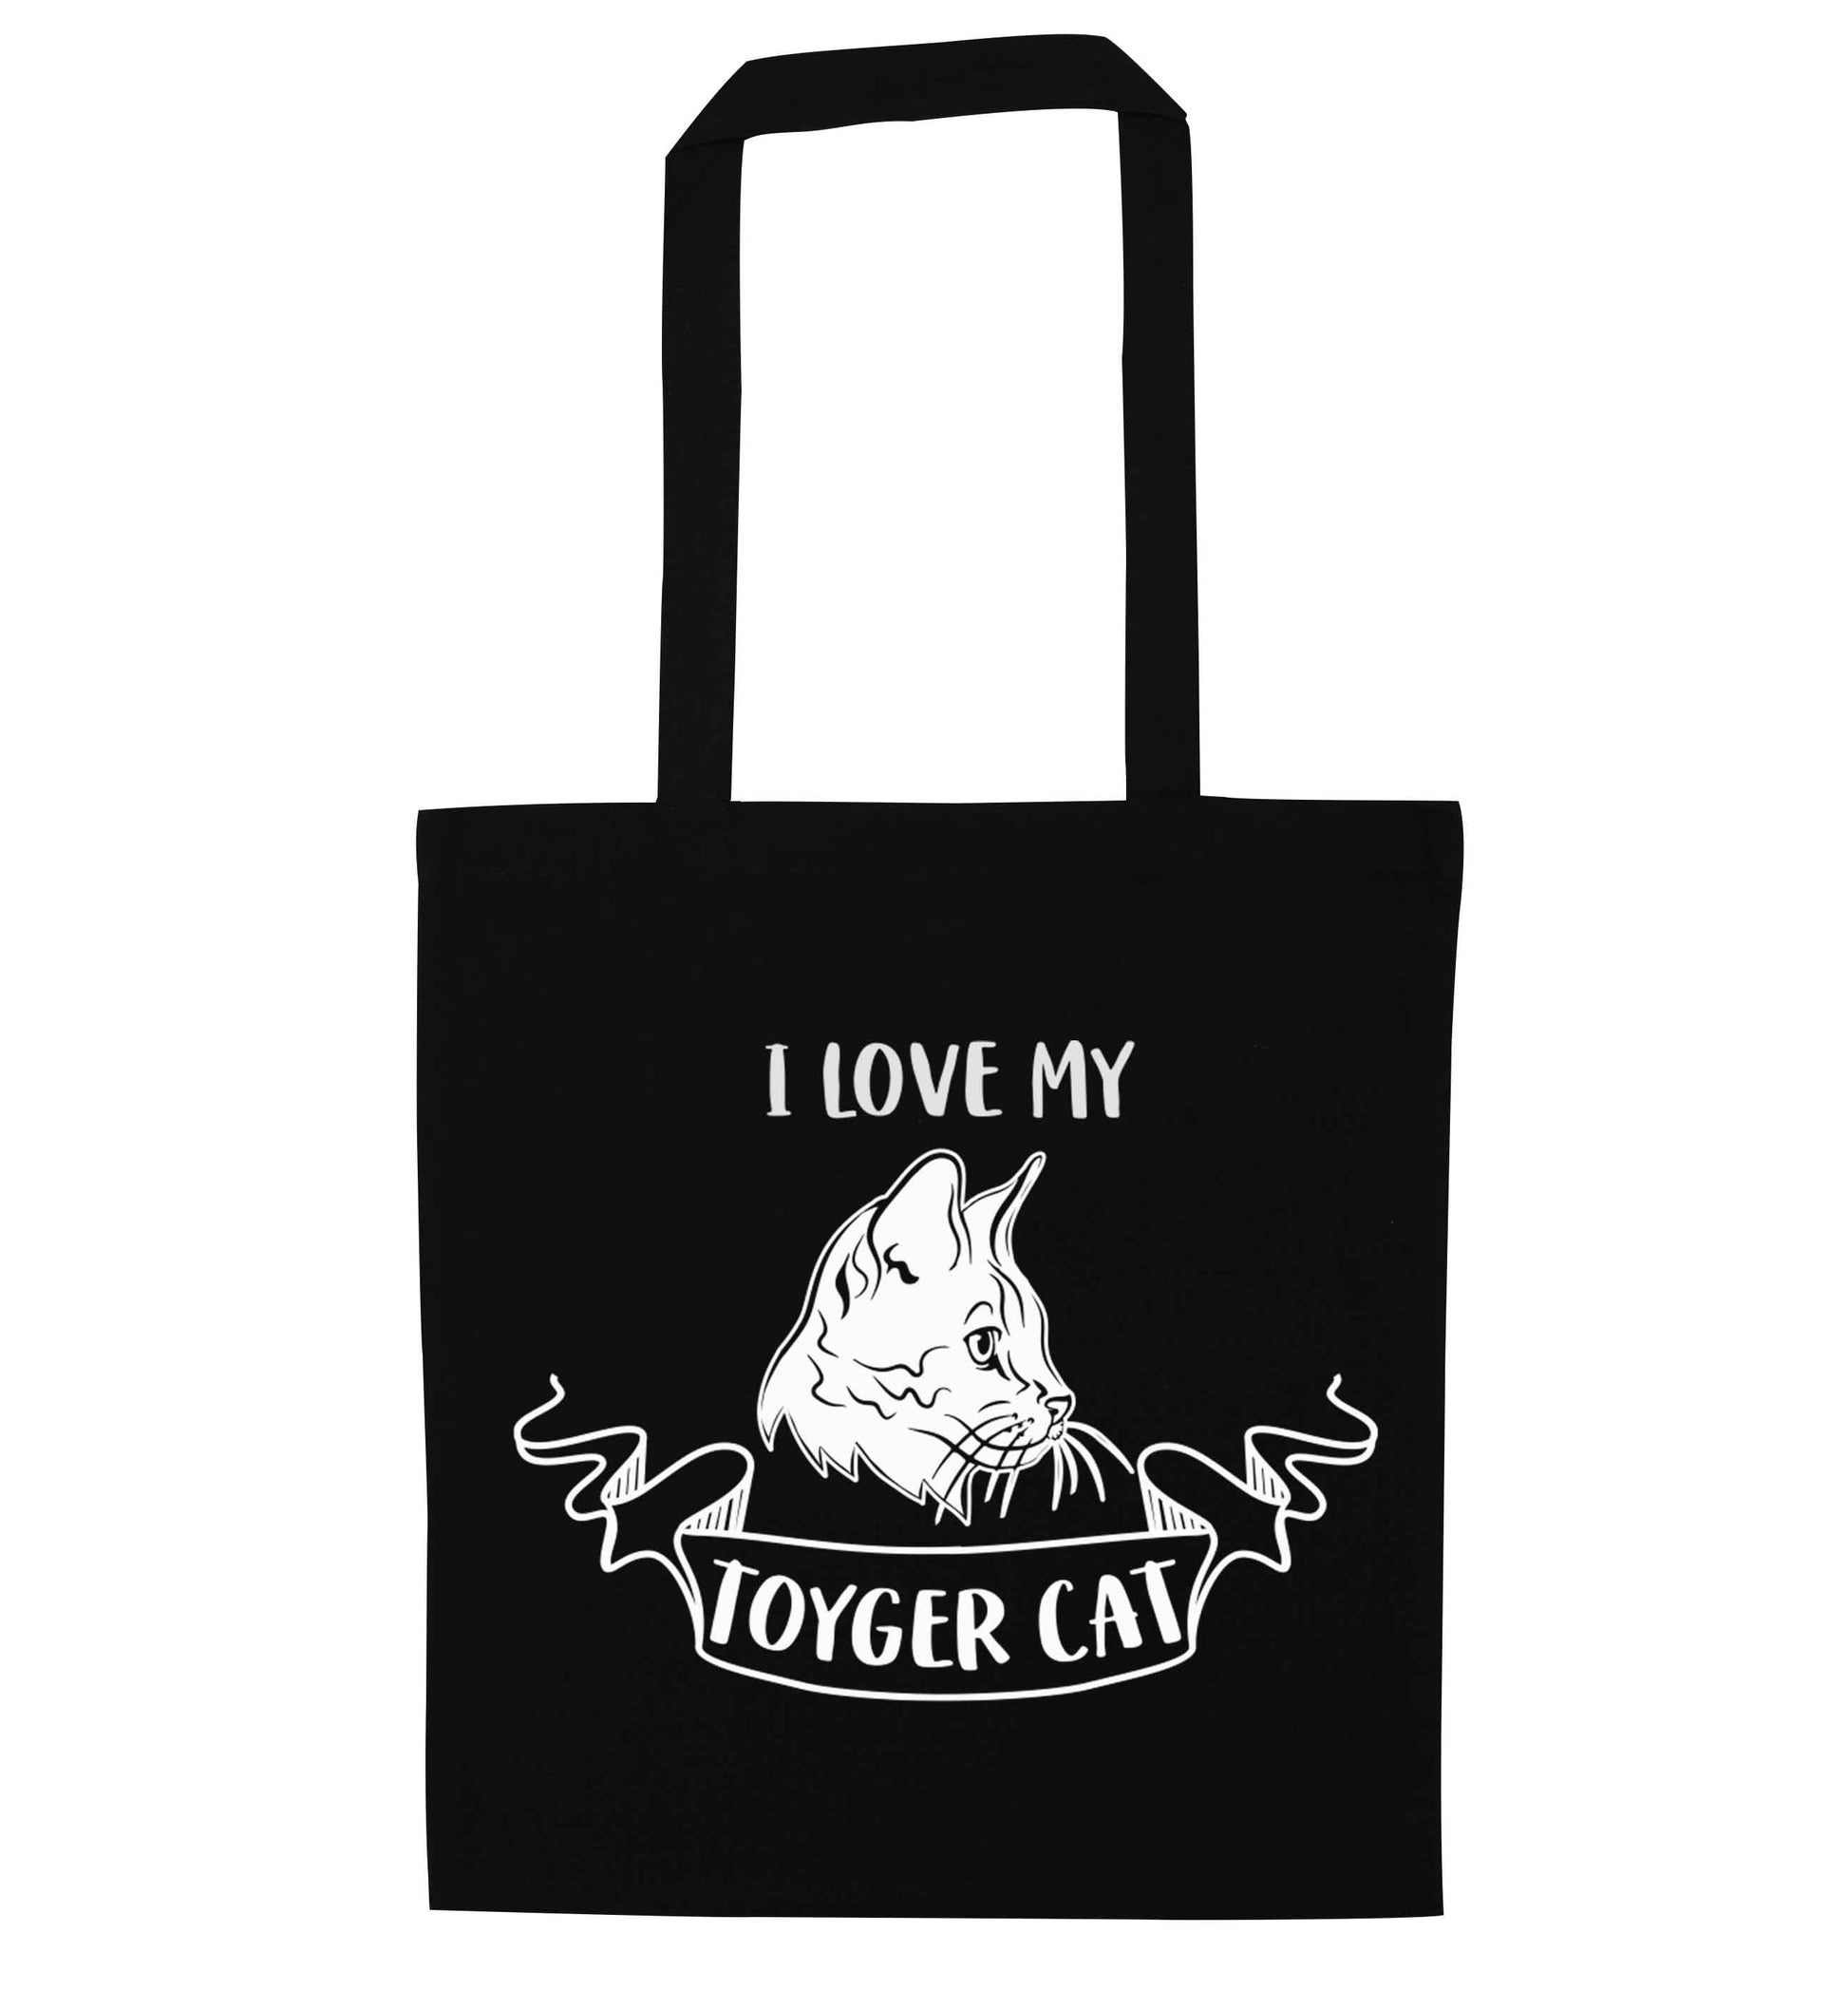 I love my toyger cat black tote bag